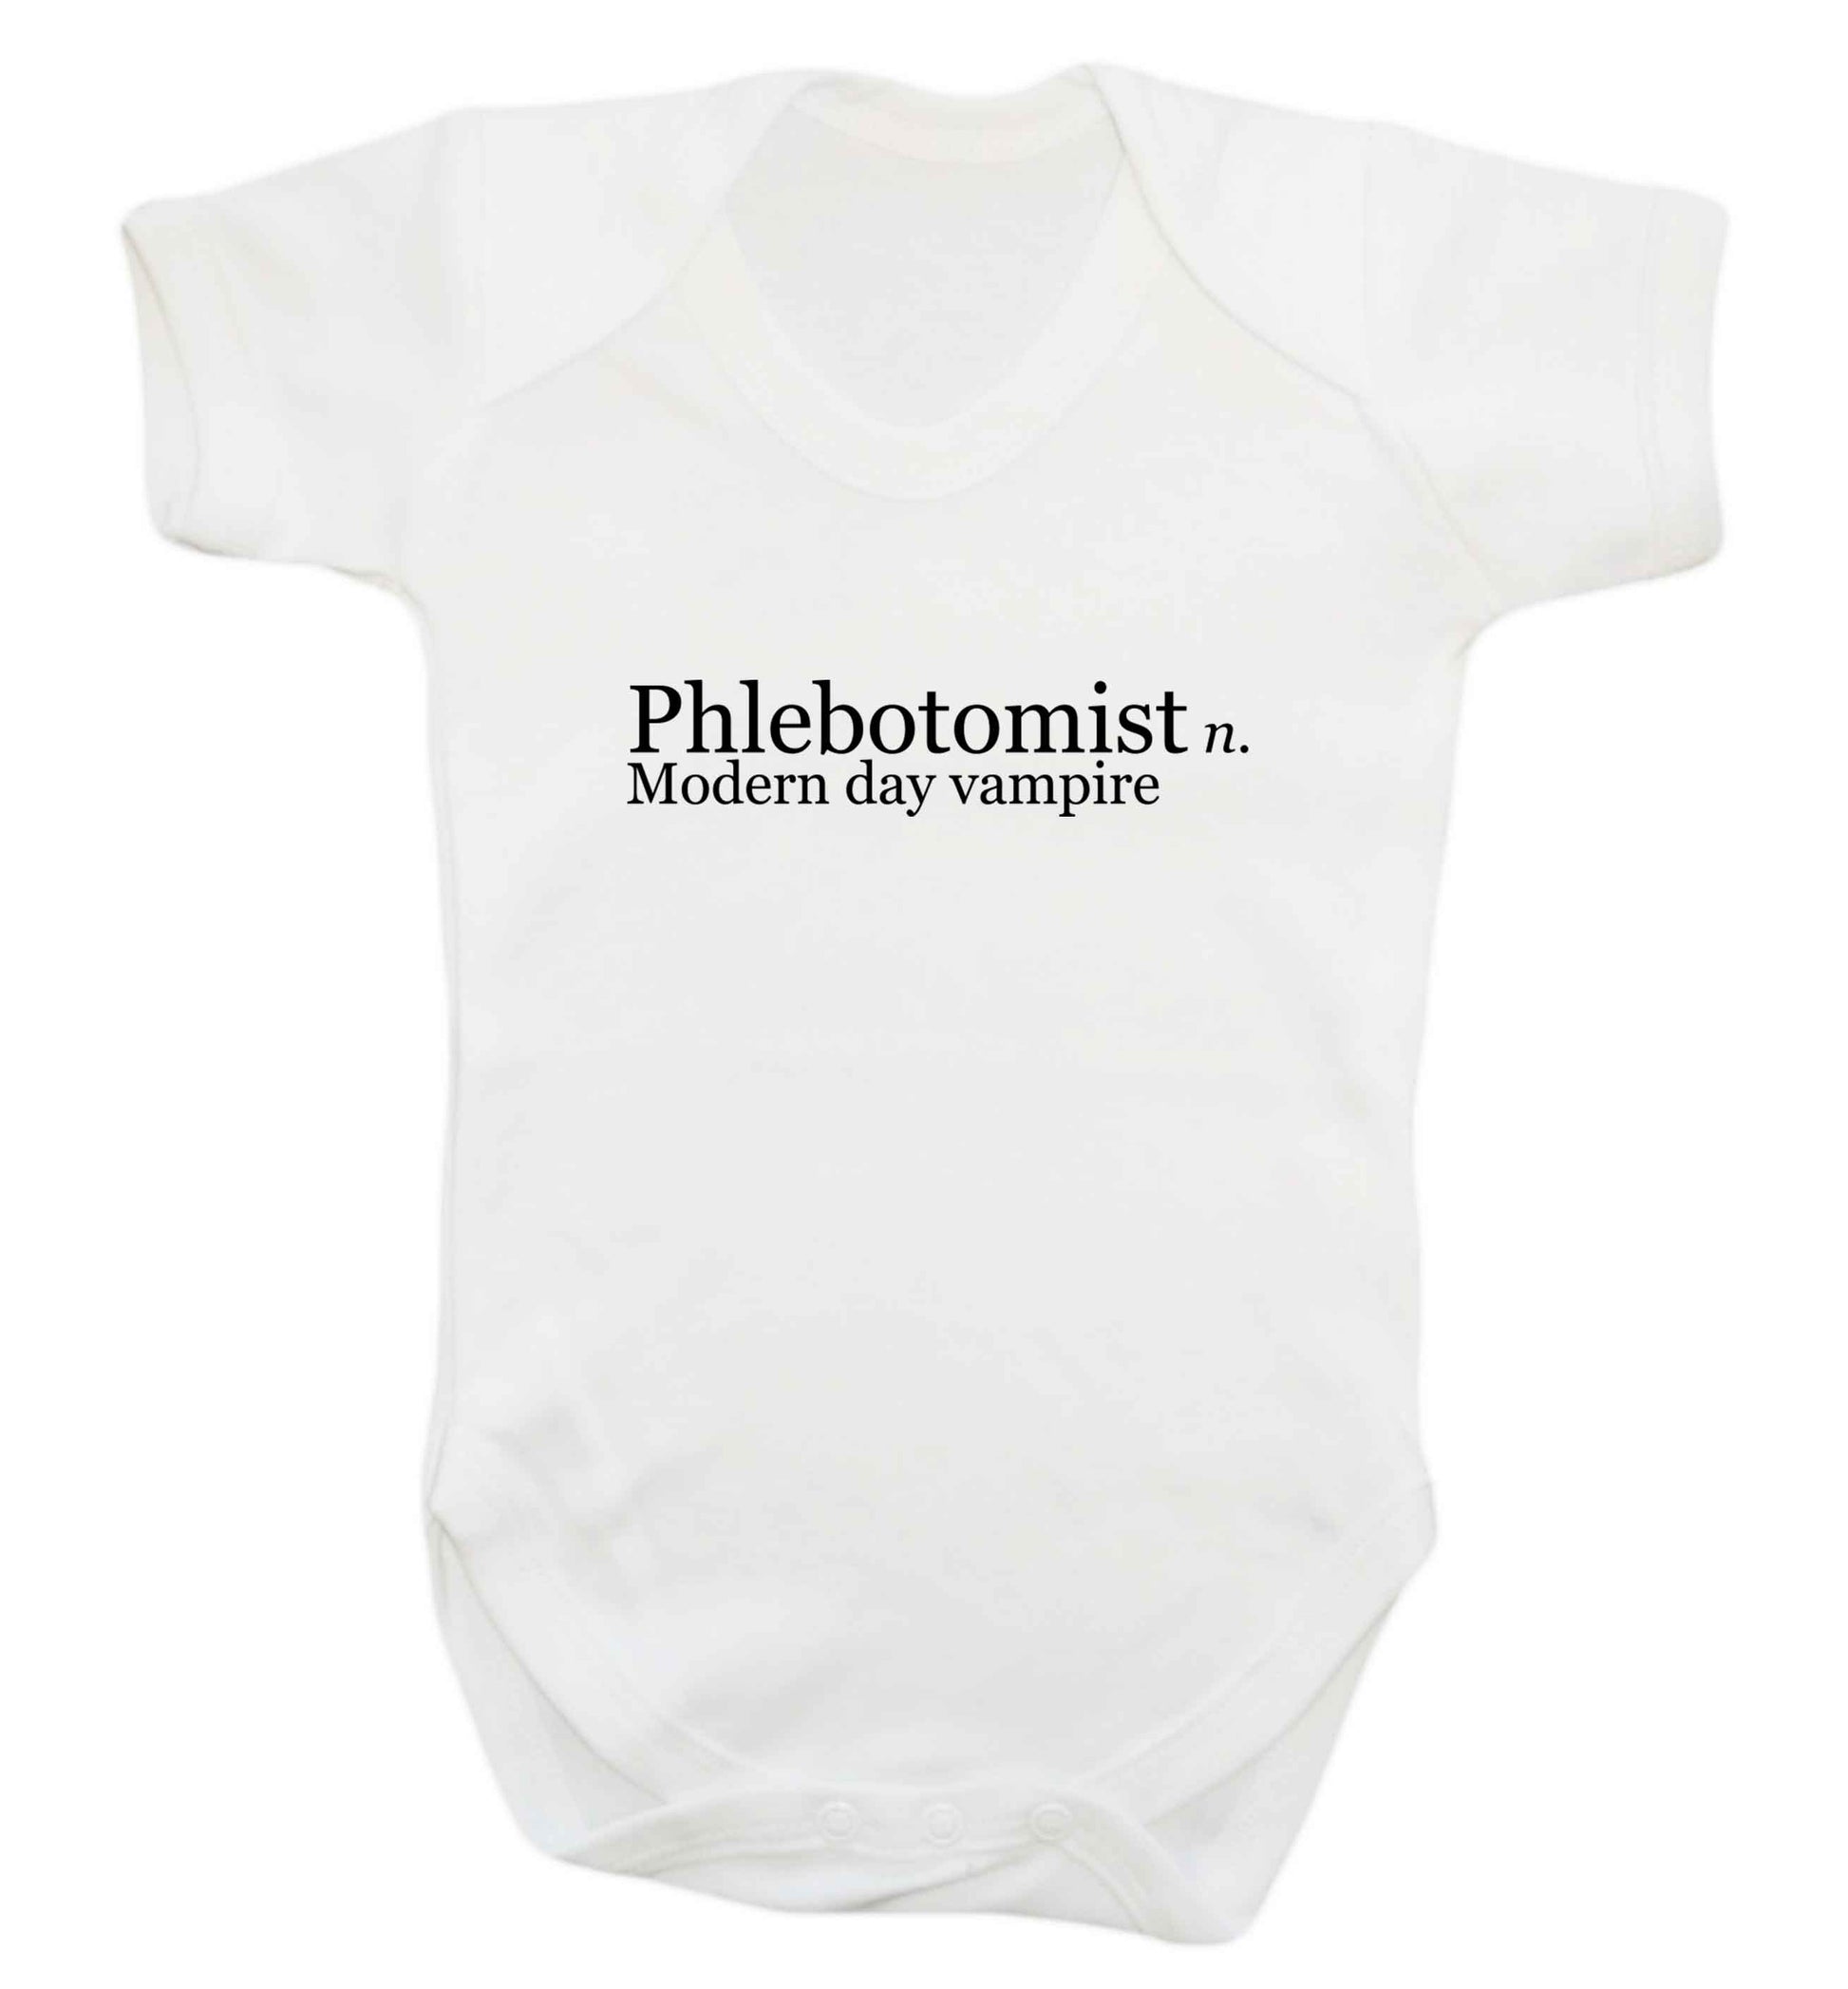 Phlebotomist - Modern day vampire baby vest white 18-24 months